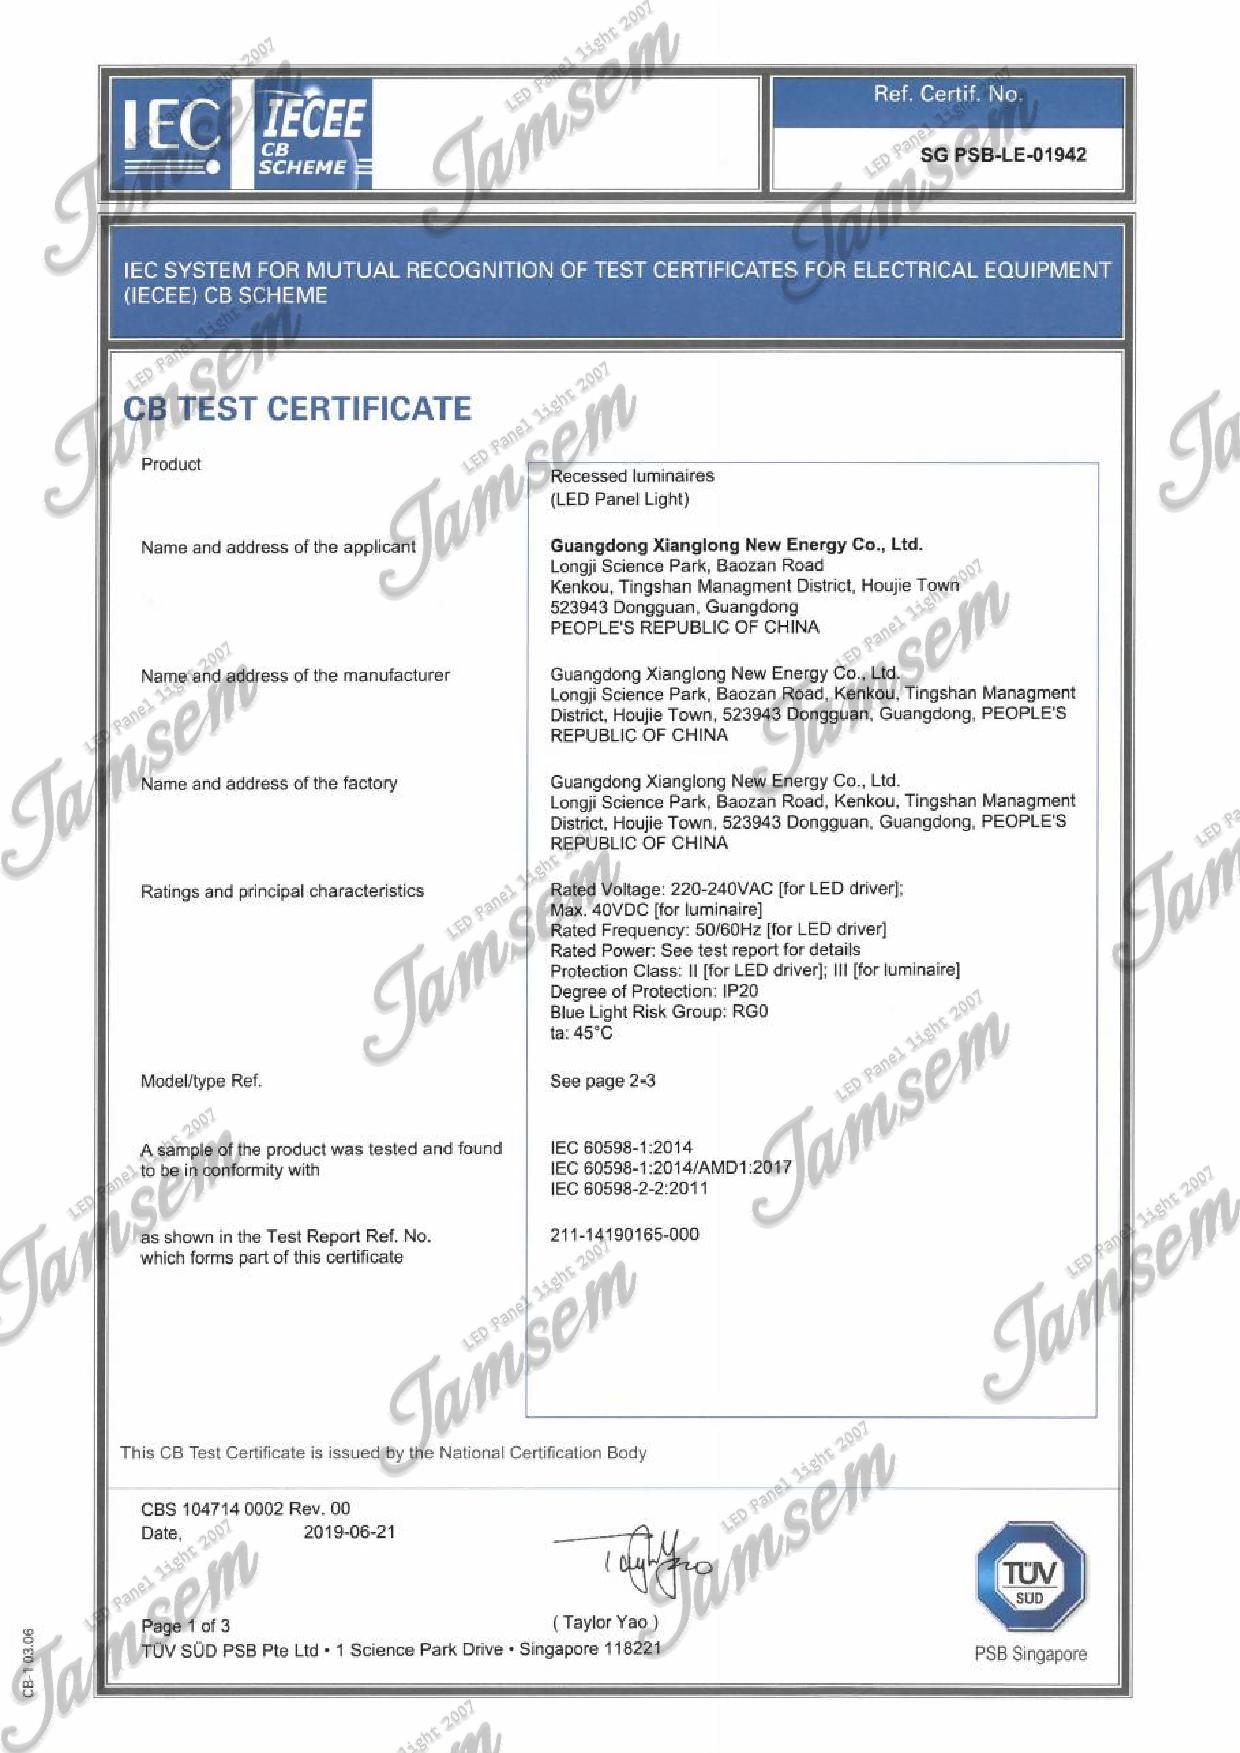 LED panel light CB certificate -JAMSEM_1